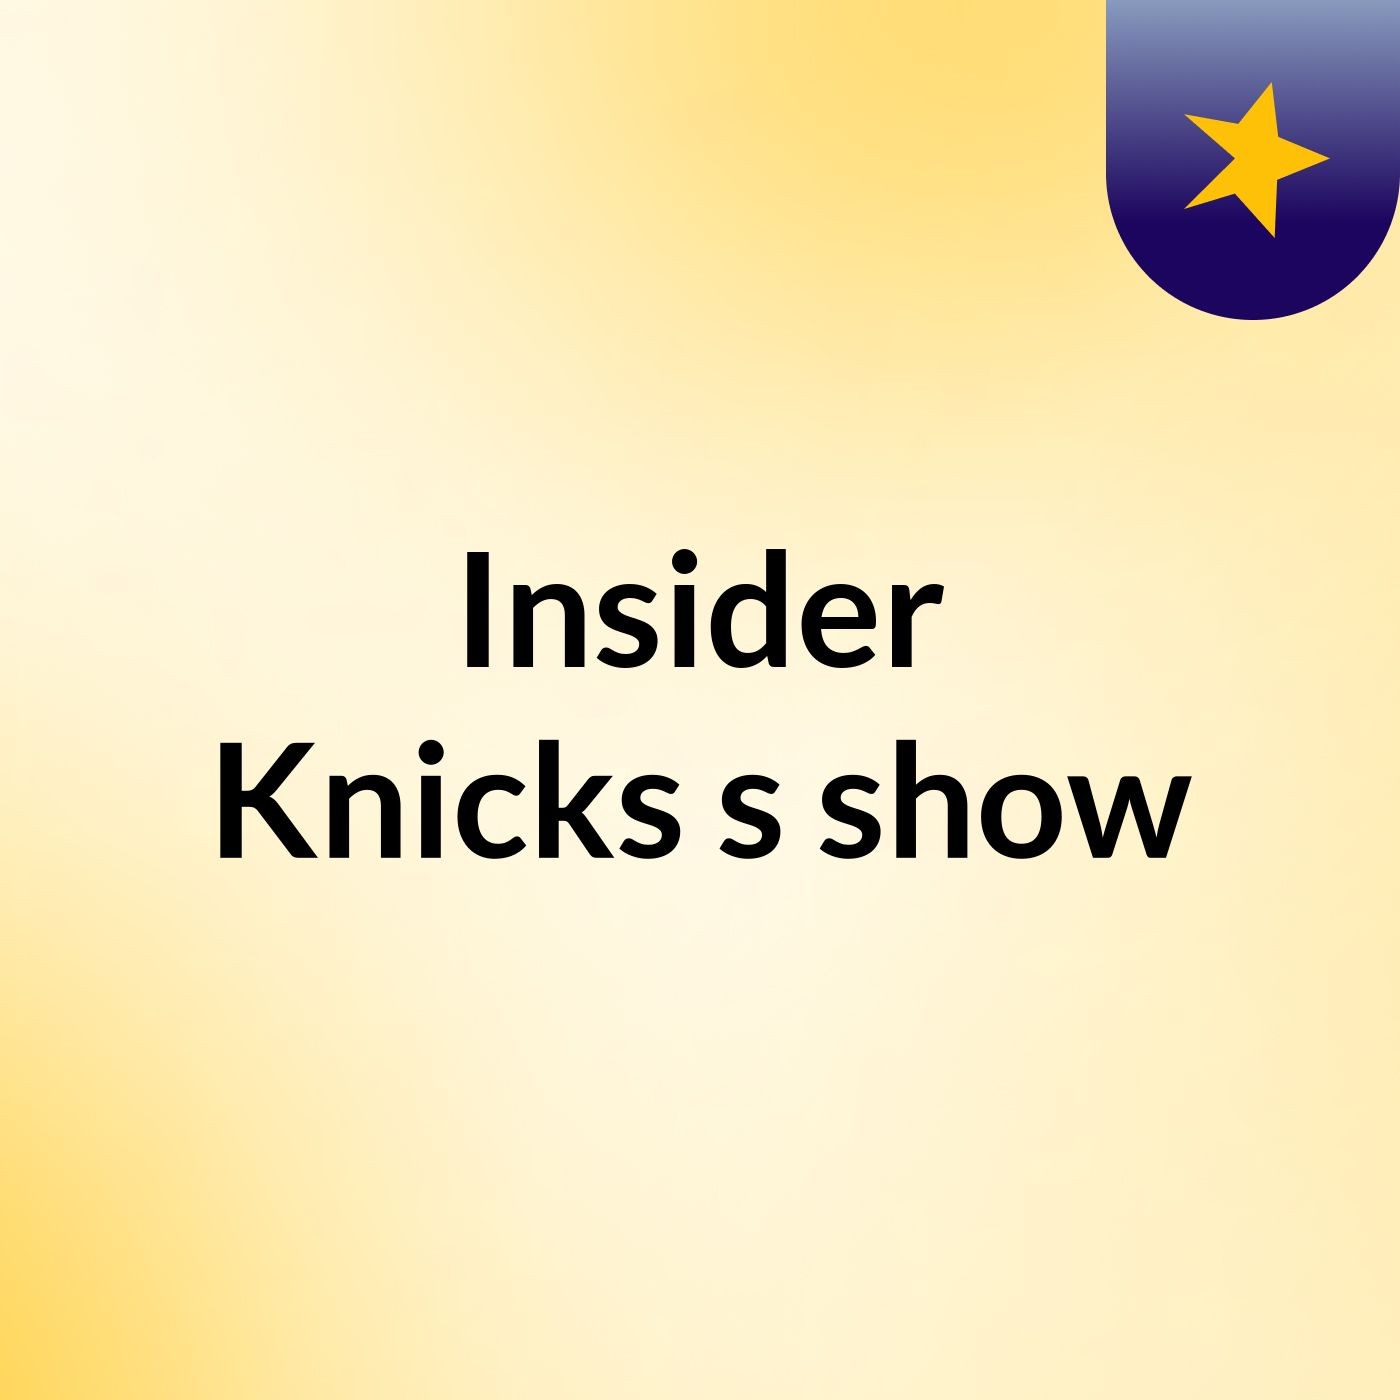 Insider Knicks's show